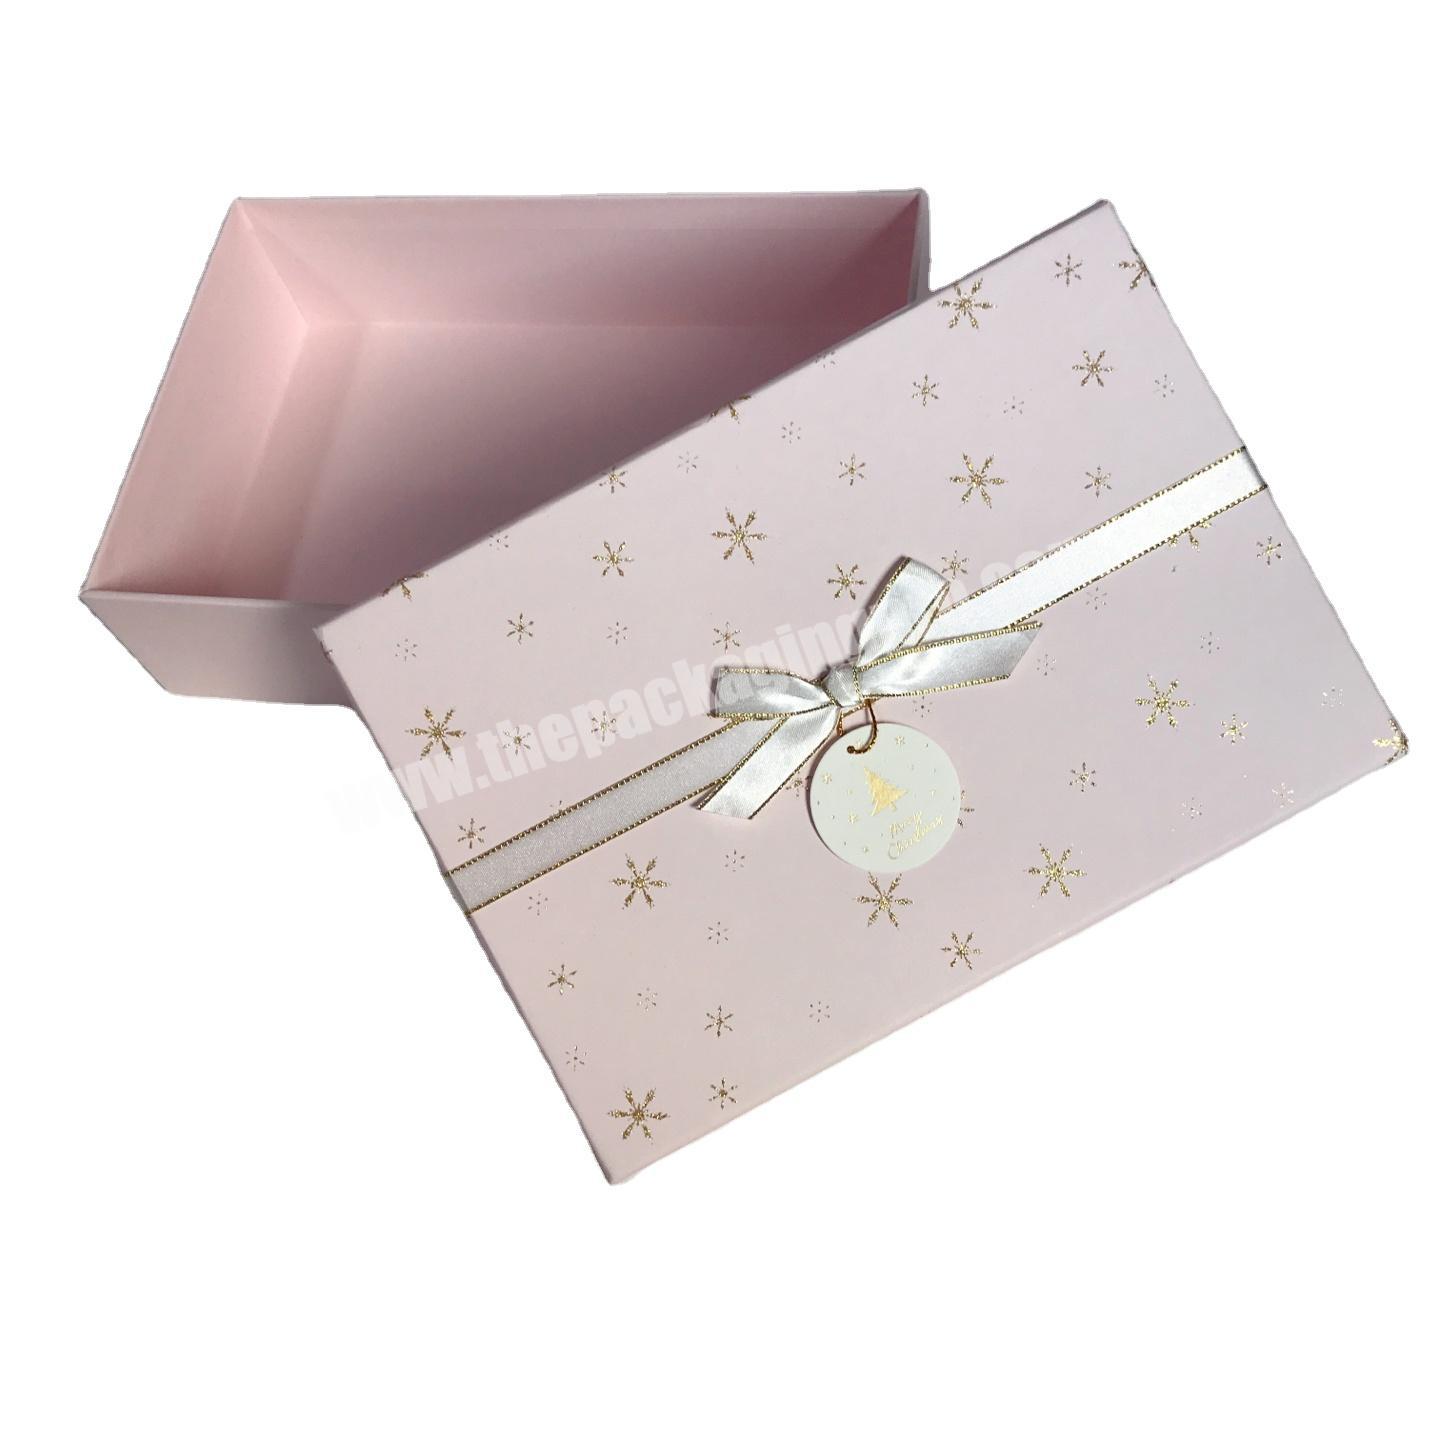 Wholesale Unique Custom Logo Cardboard Package Gift Box Luxury Paper Box Christmas Box